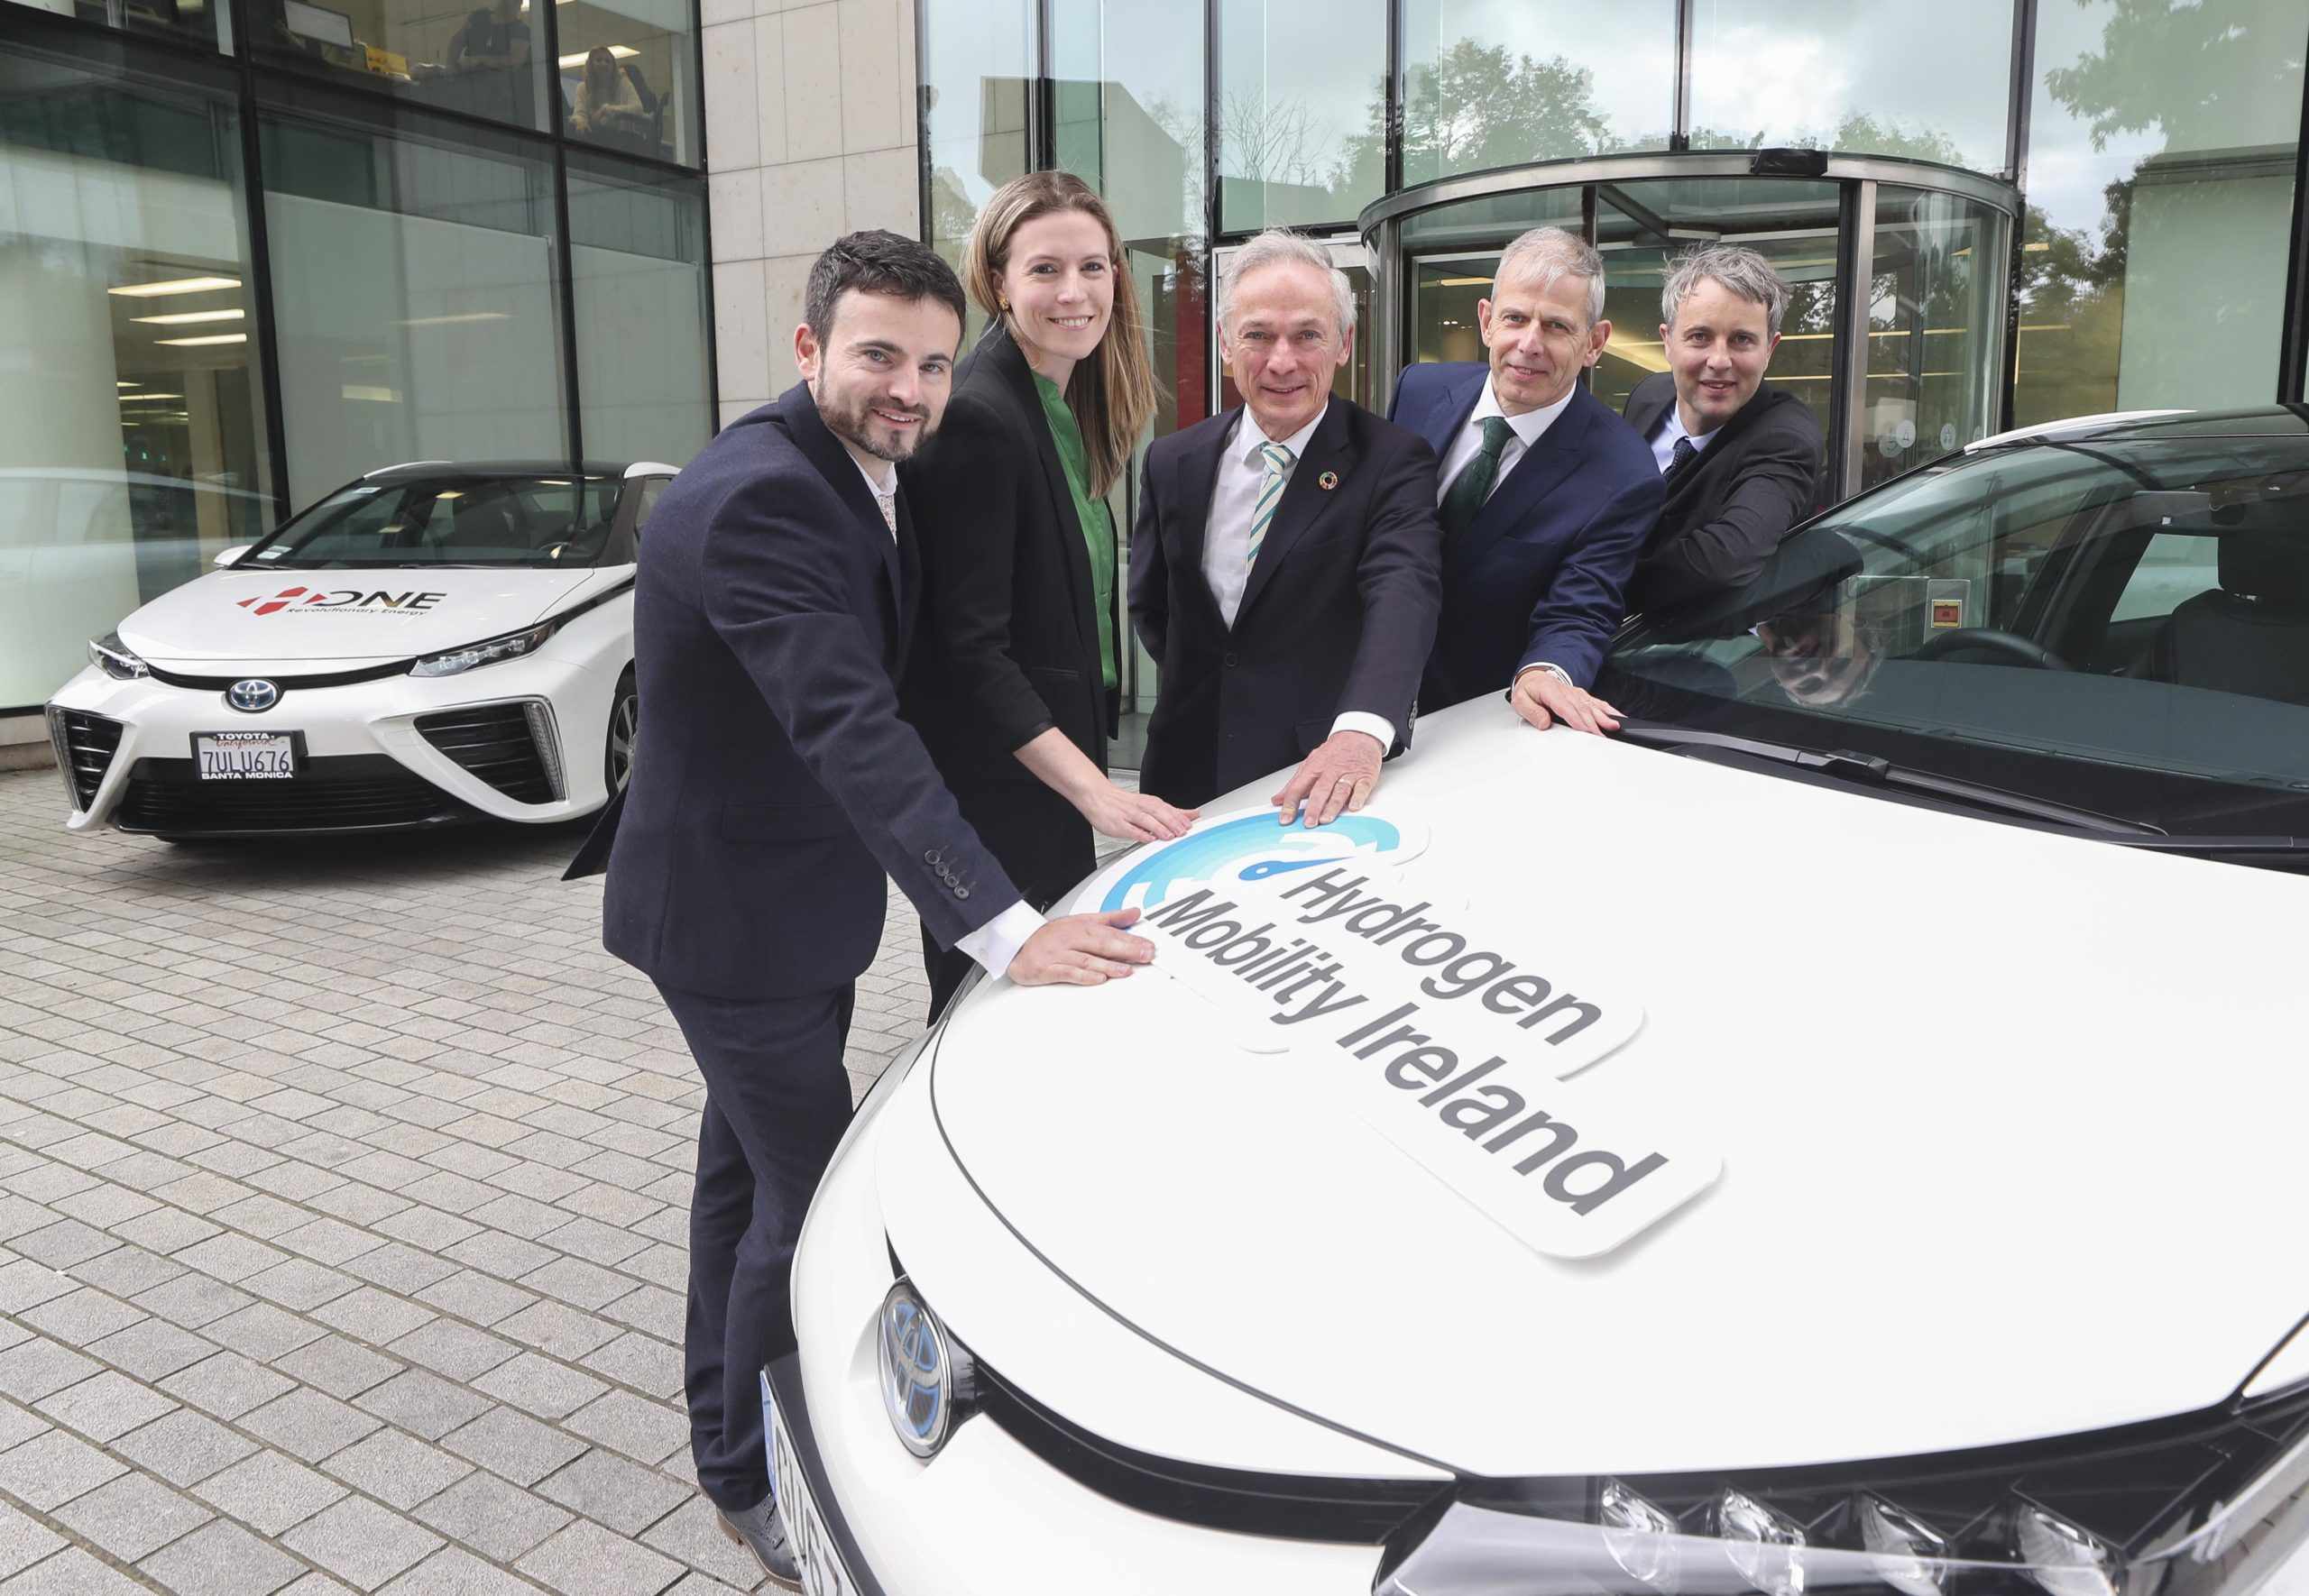 Hydrogen Mobility Ireland